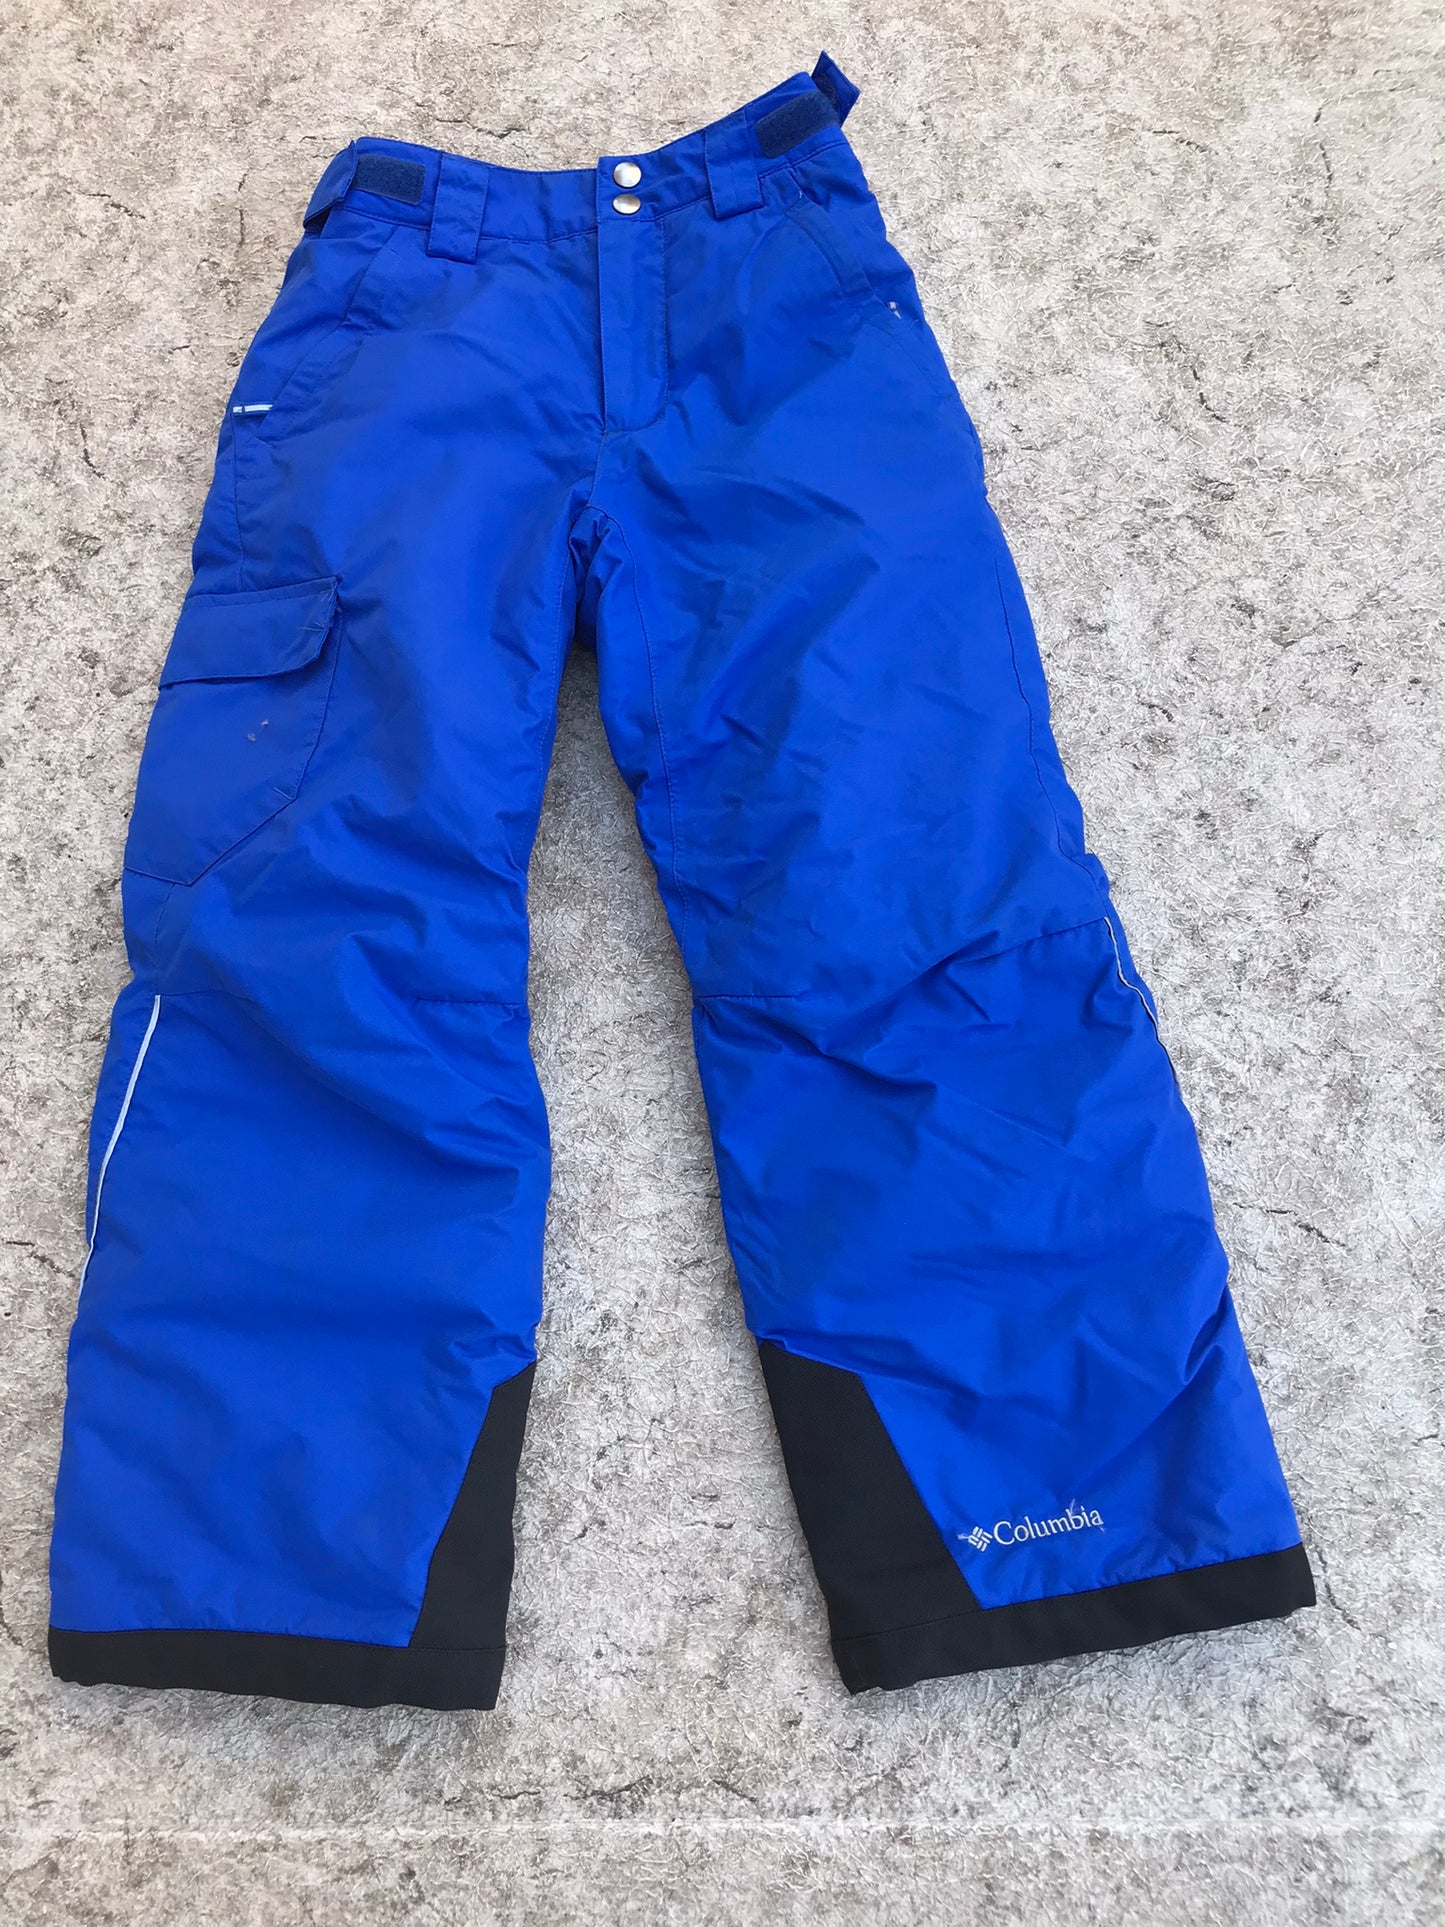 Snow Pants Child Size 7-8 Columbia Ocean Blue New Demo Model